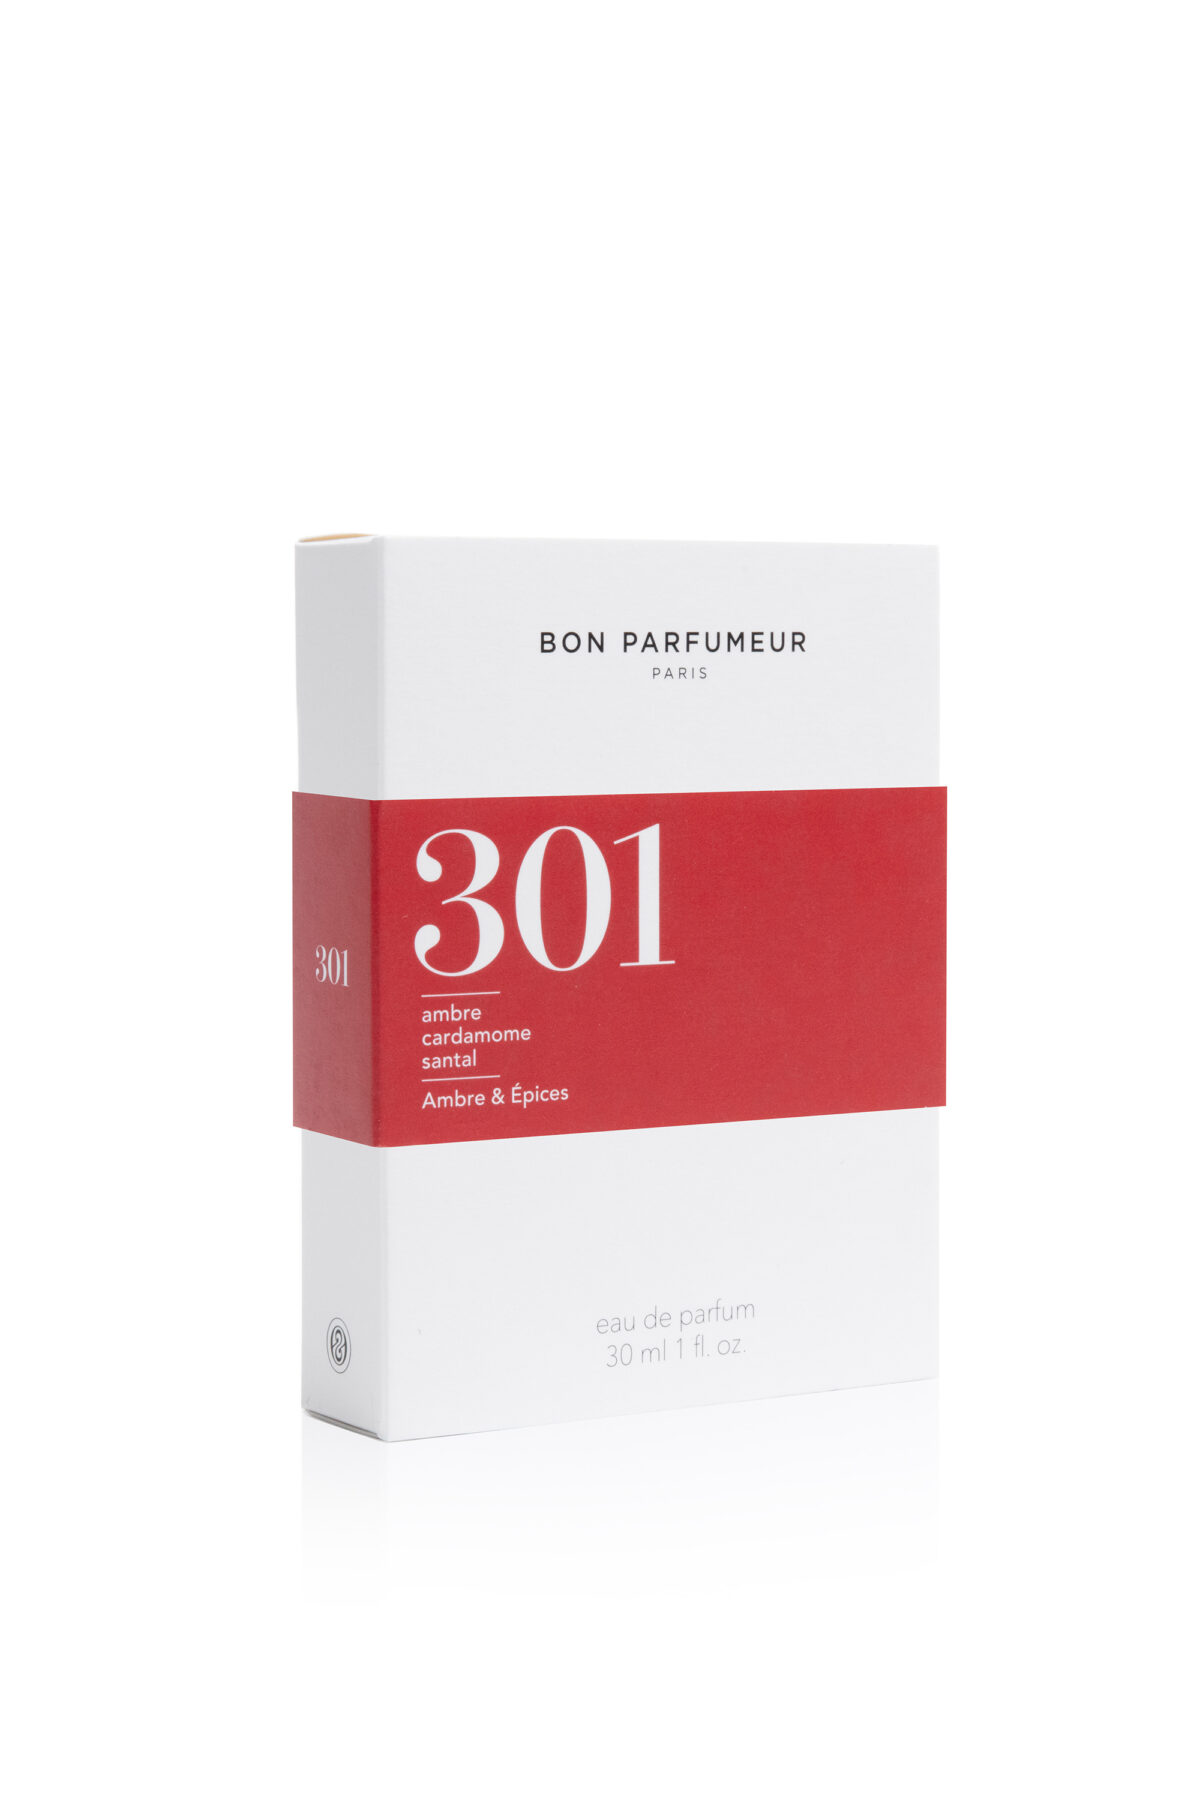 bon-parfumeur-301-sandalwood-amber-cardamom-matchboxathens